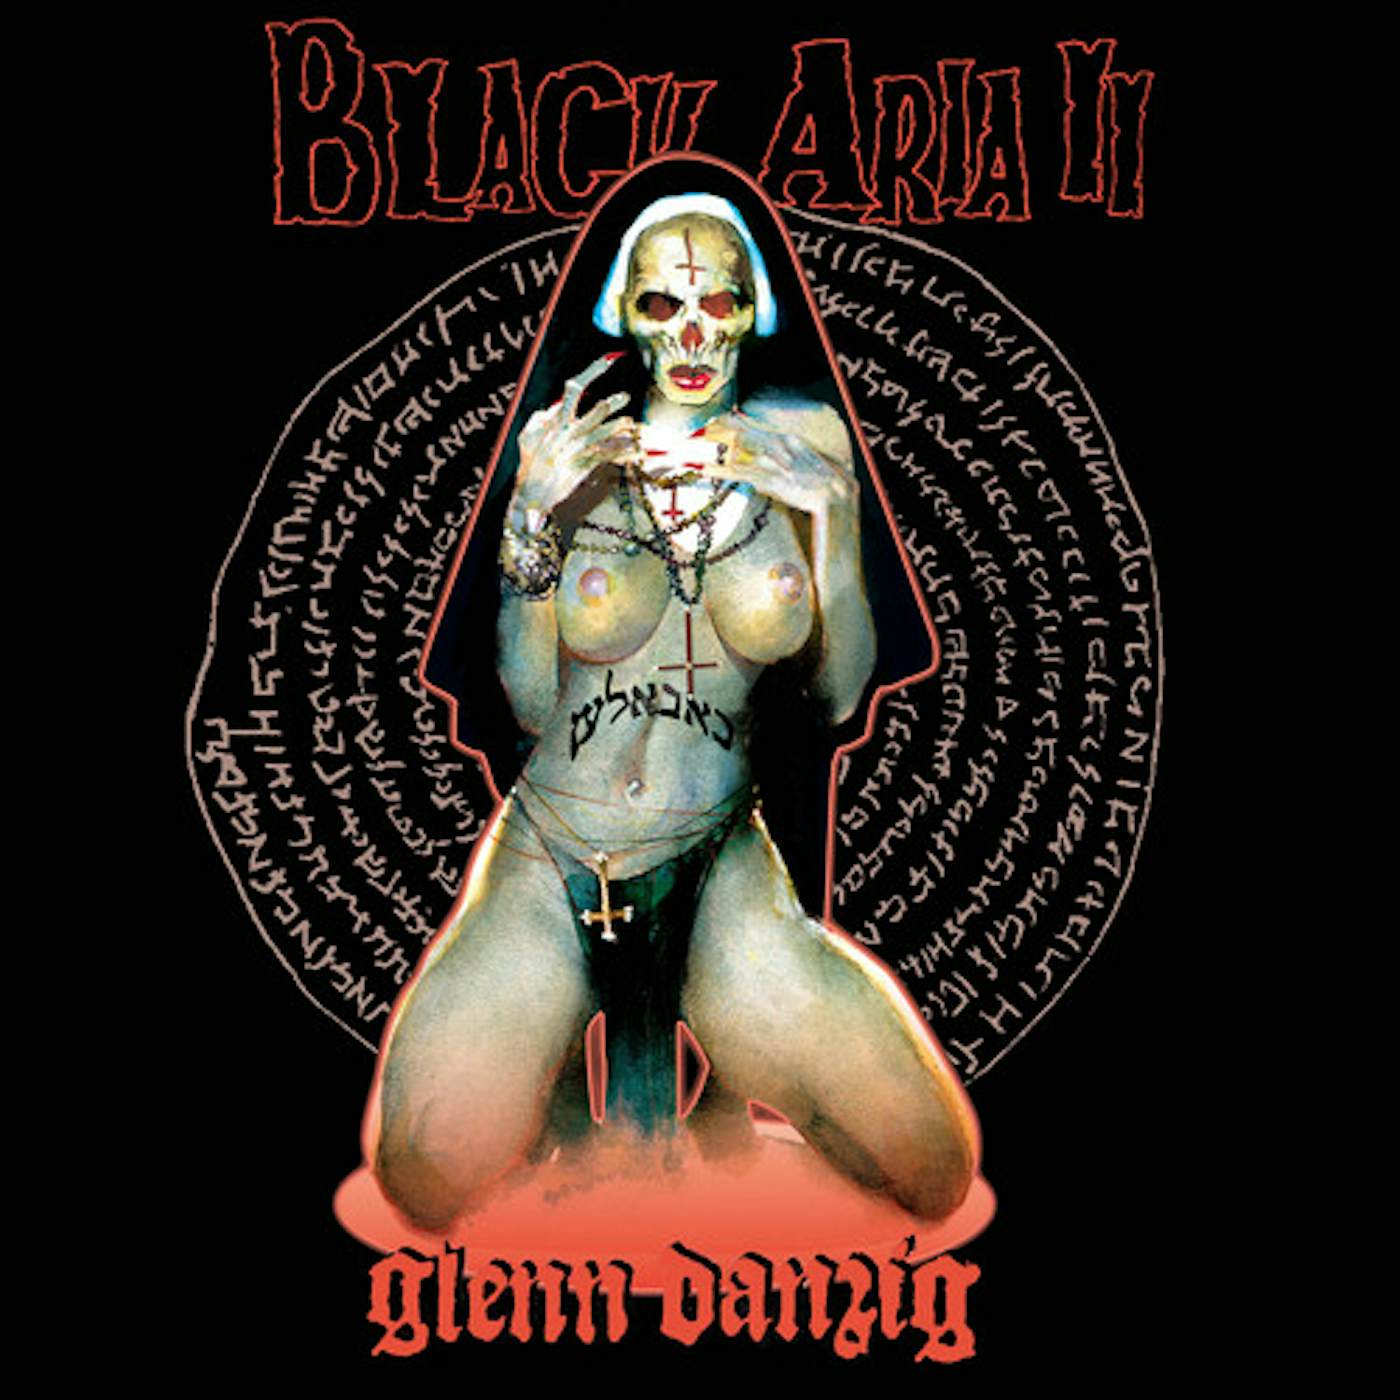 Danzig Black Aria 2 (Black/White Splatter) Vinyl Record